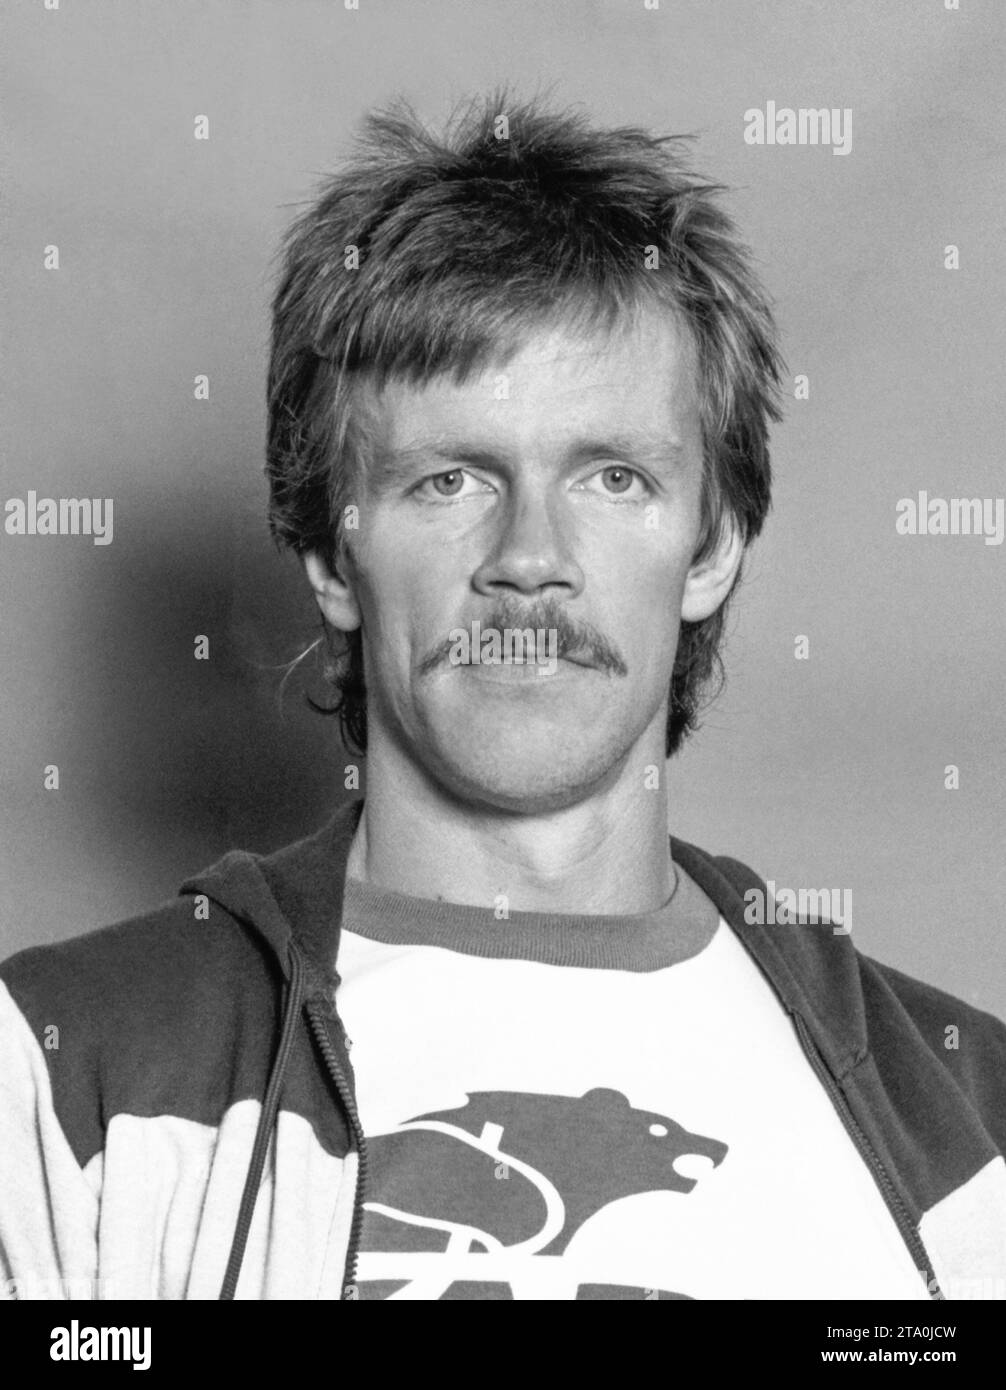 CHRISTER GARPENBORG Swedish sprint athlete in National athletics teamneg nr 31323 Stock Photo